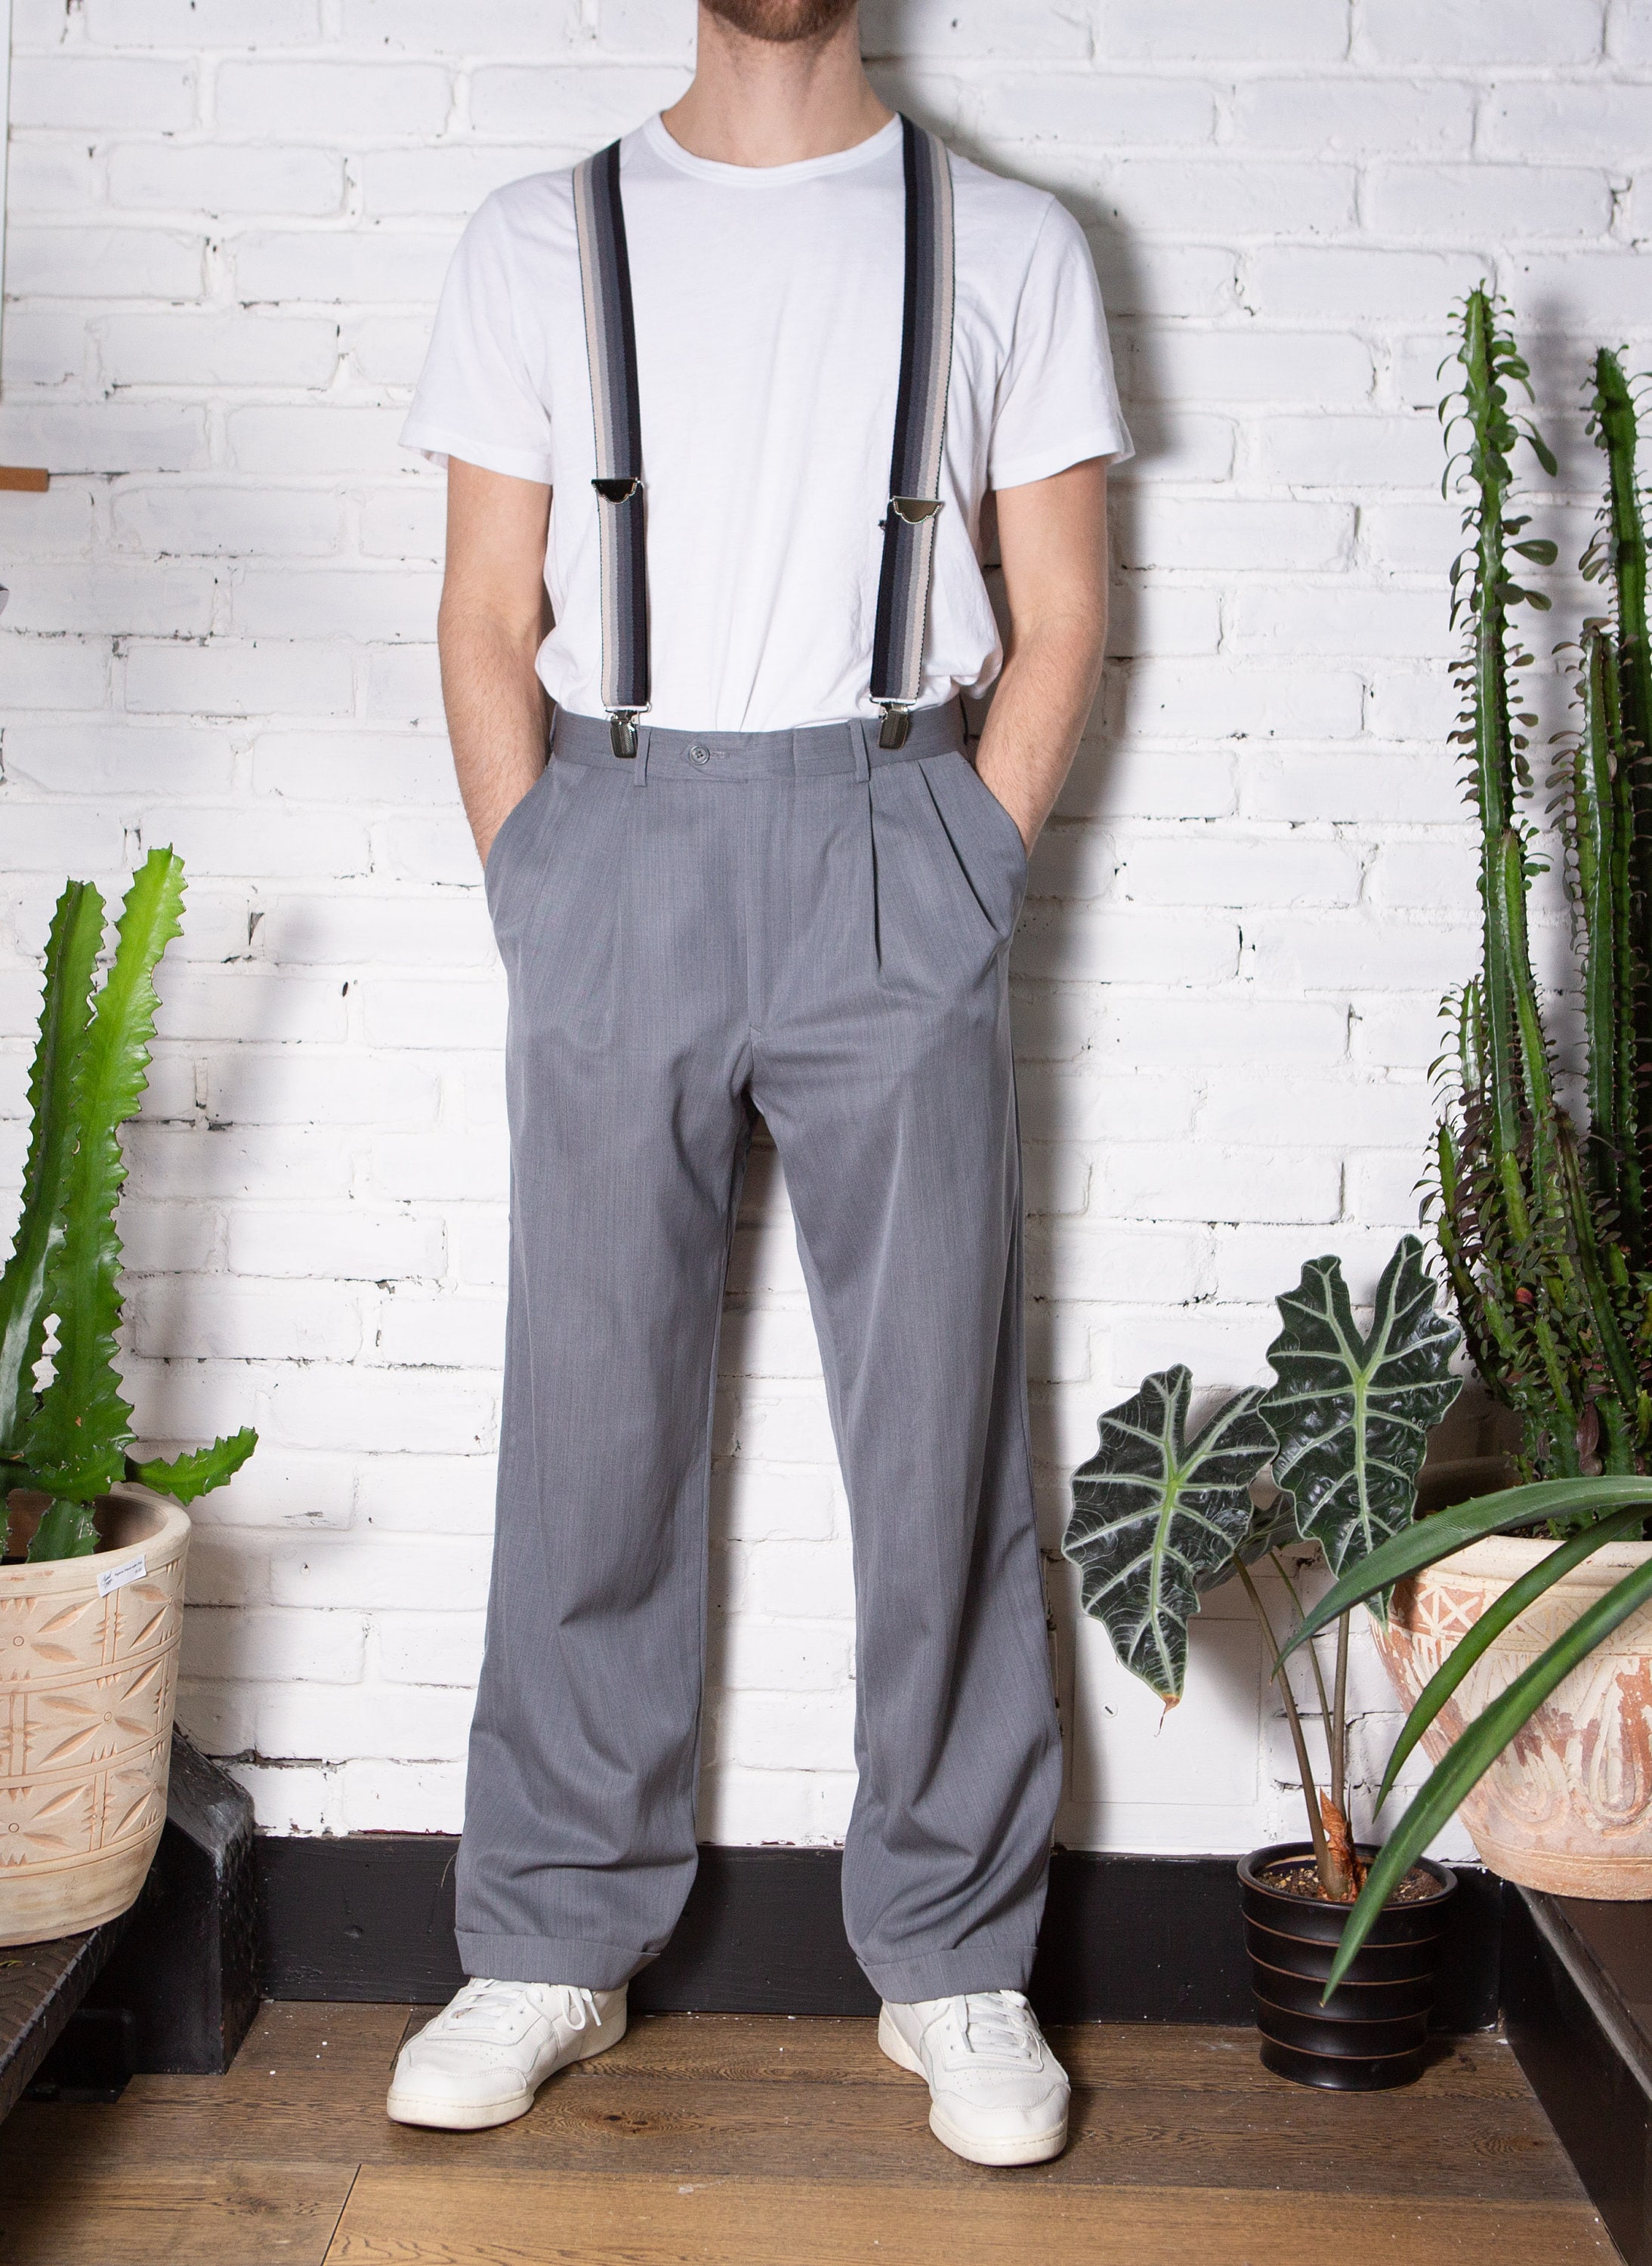 Vintage Mens Trousers With Suspenders W33 Grey Dress Pants